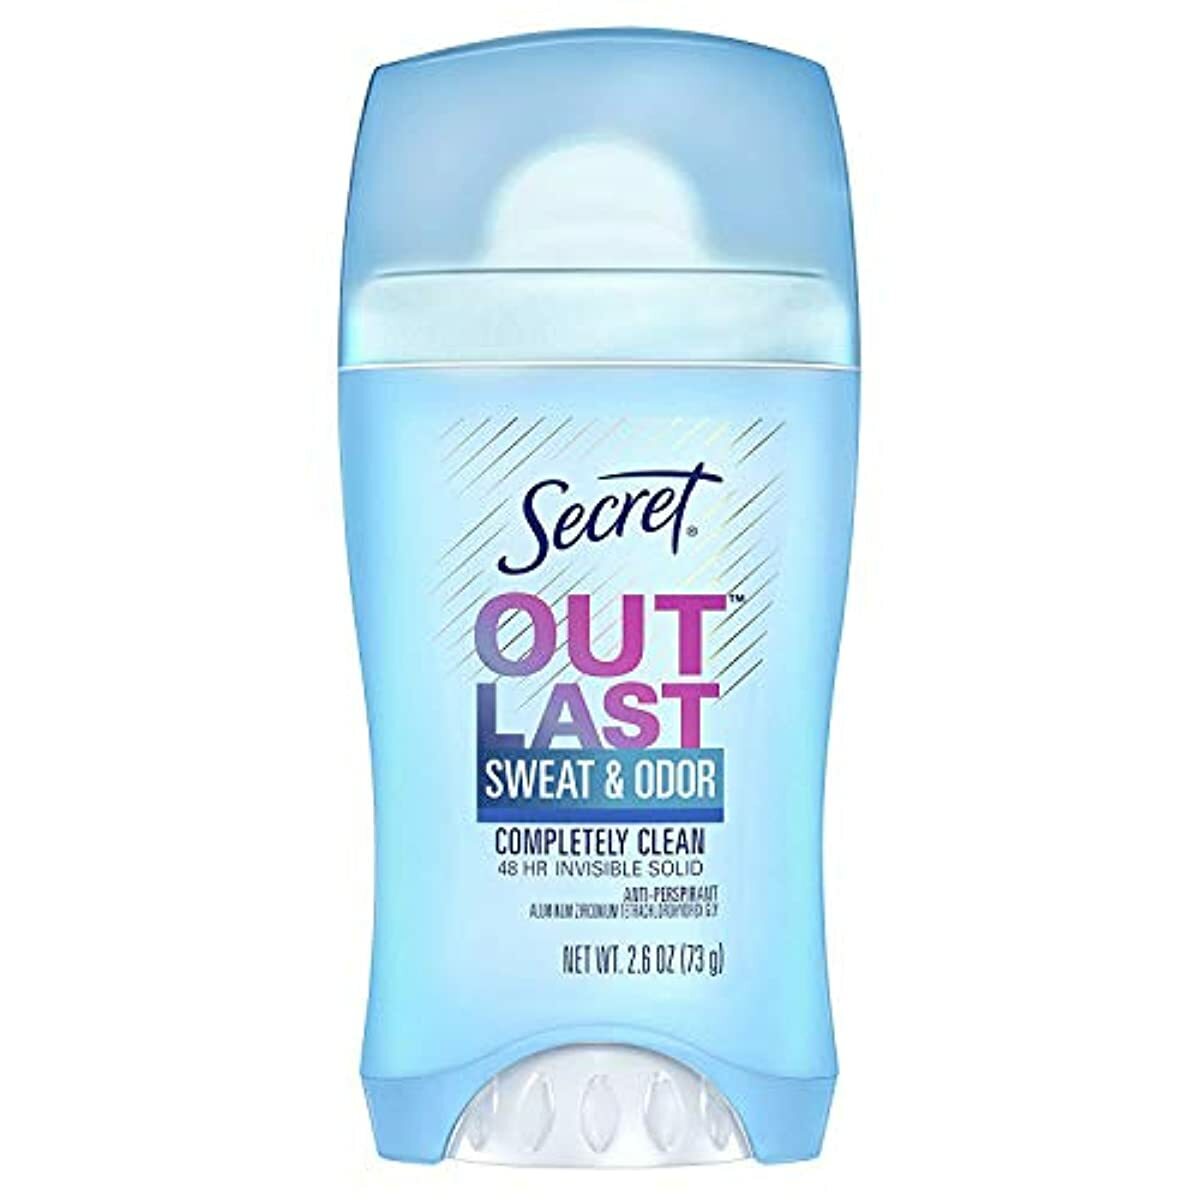 Secret Outlast Sweat & Odor, 2.6 oz